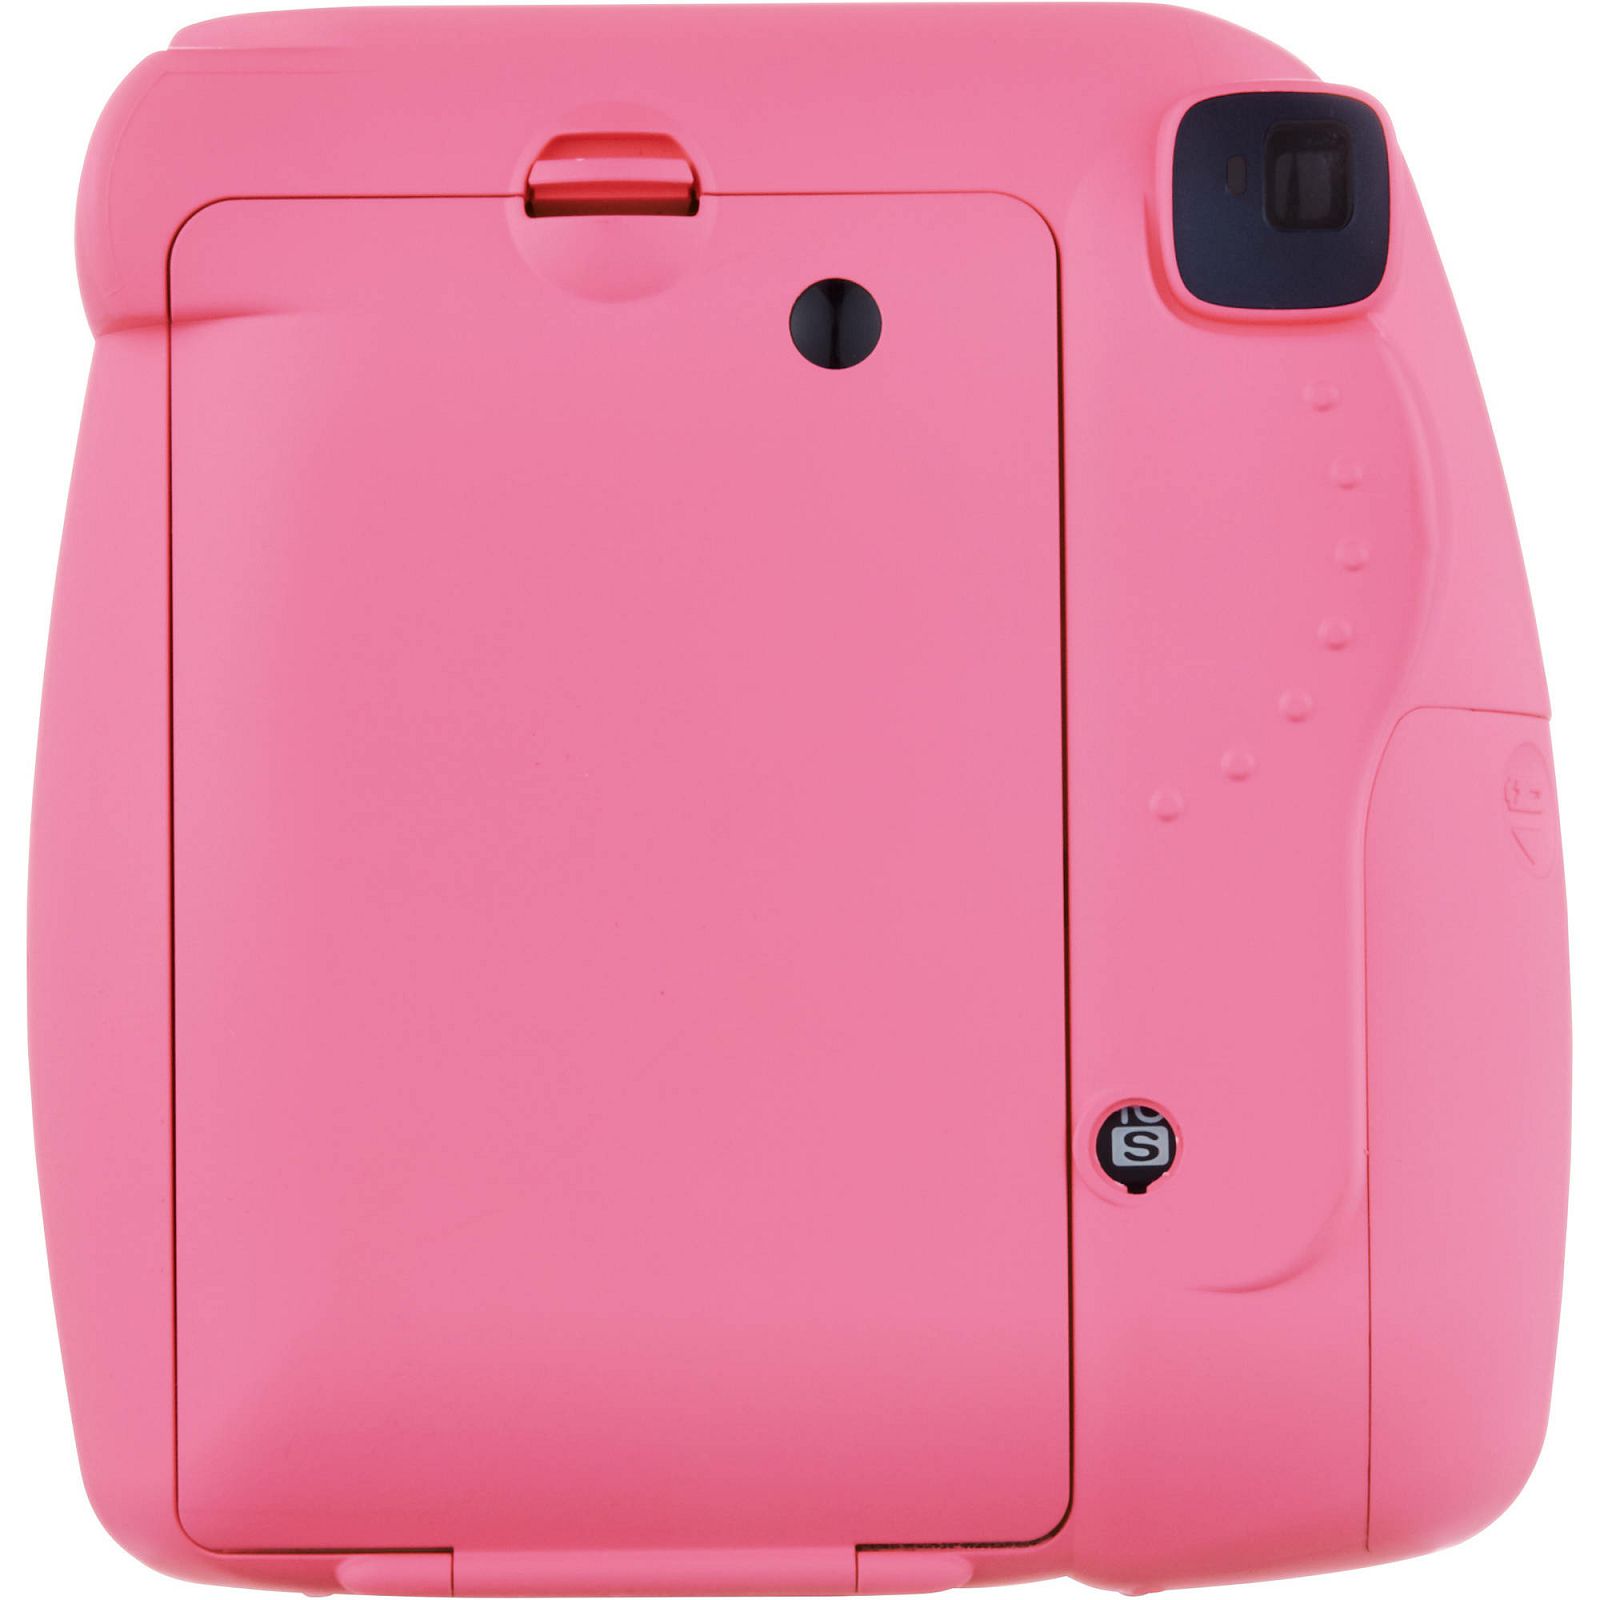 Fuji Instax Mini 9 KIT Flamingo Pink rozi (fotoaparat + album + 1x10 film papiri + futrola)